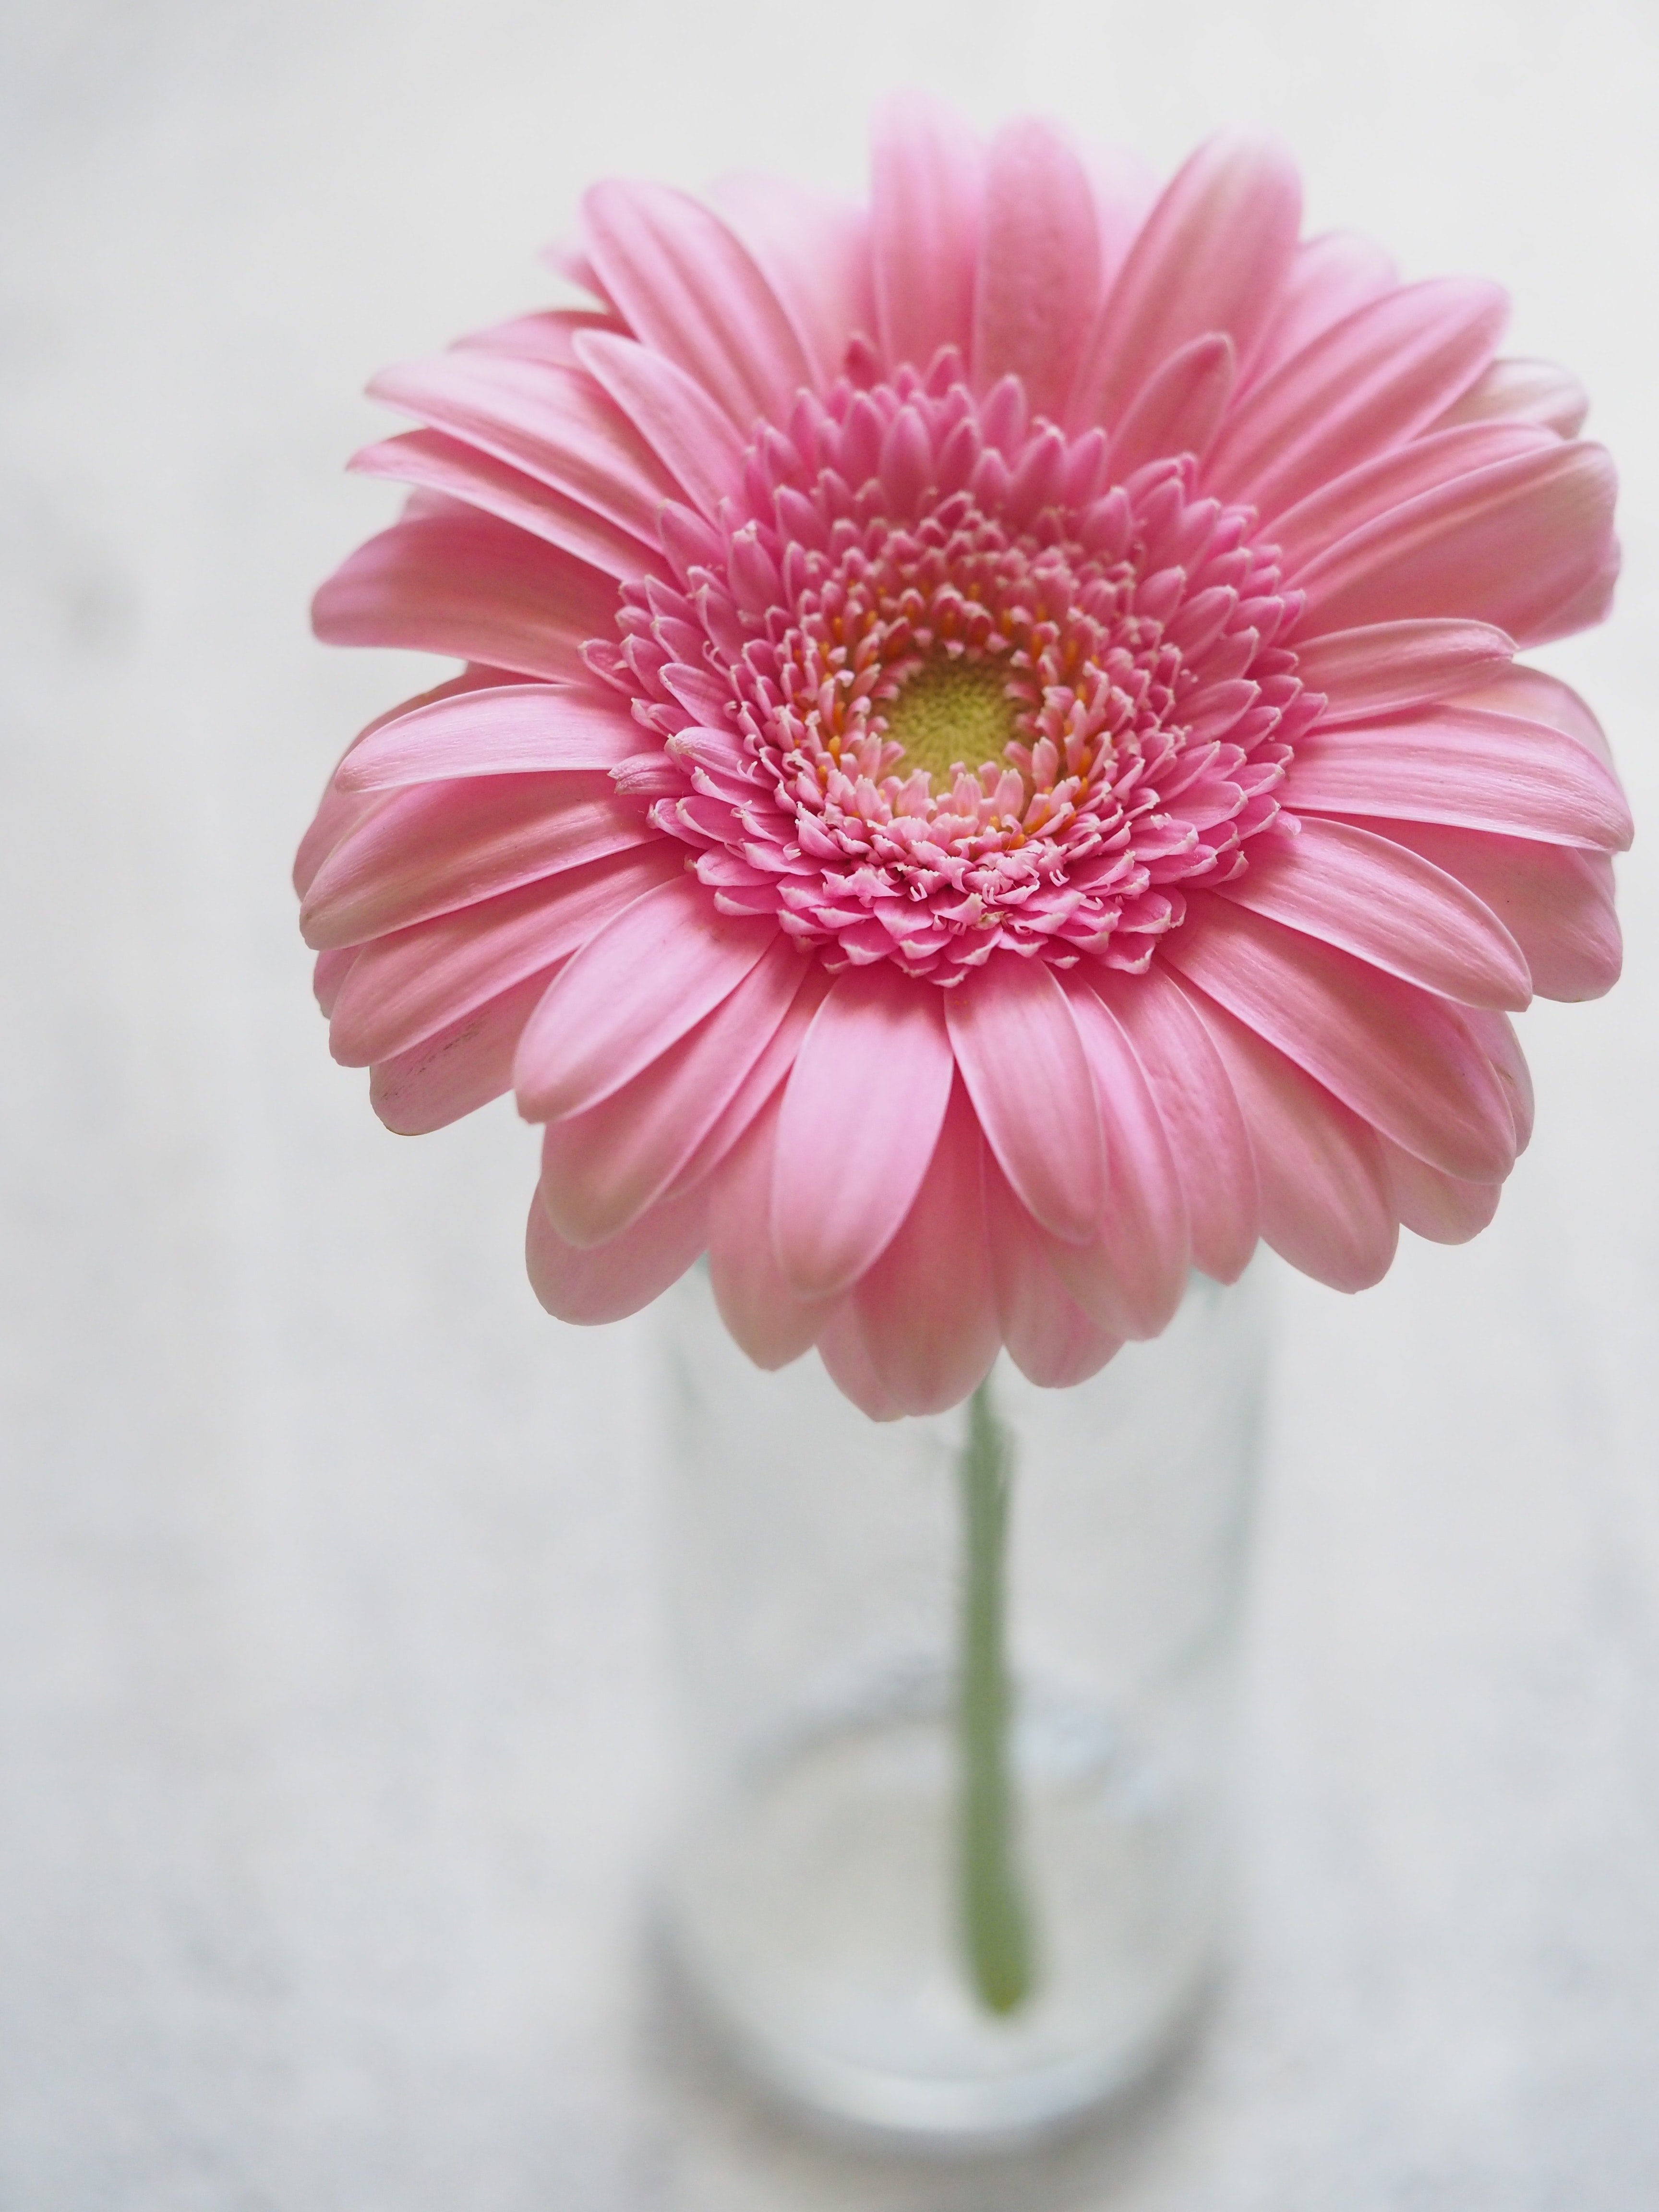 Pink Gerbera Flower in Closeup Photography · Free